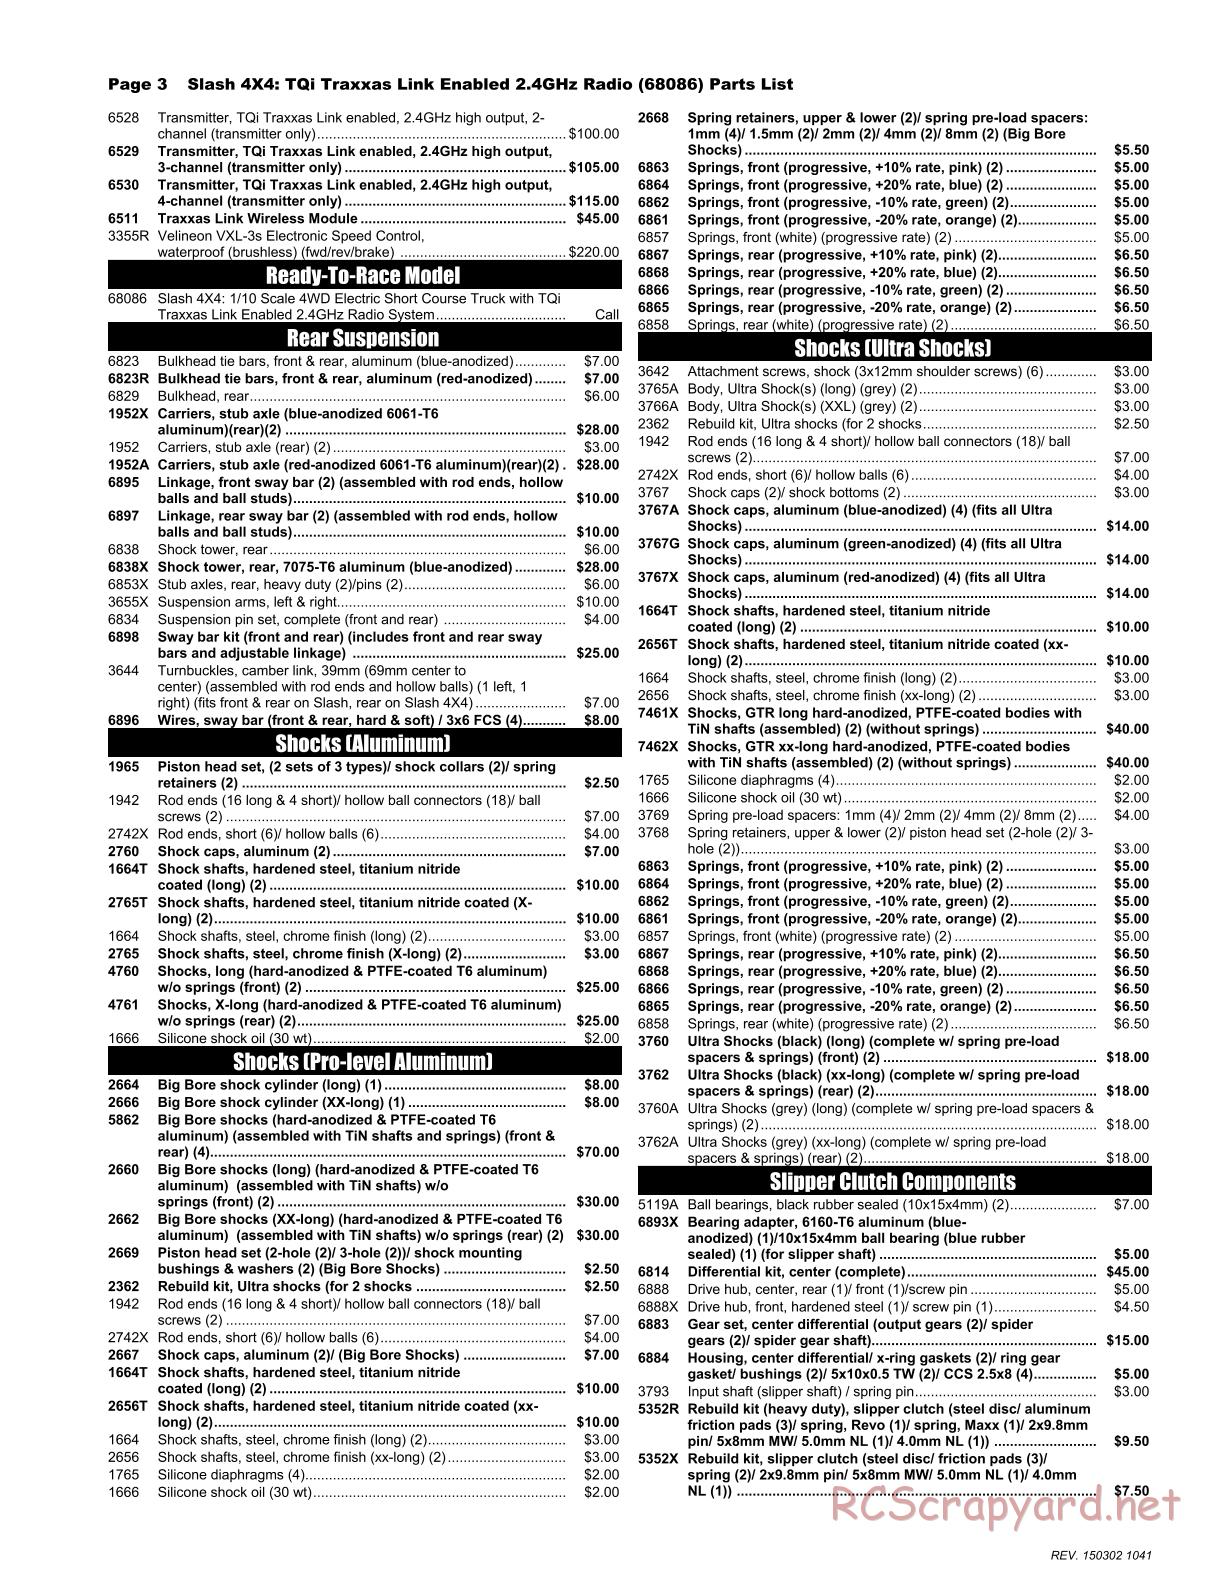 Traxxas - Slash 4x4 (2014) - Parts List - Page 3